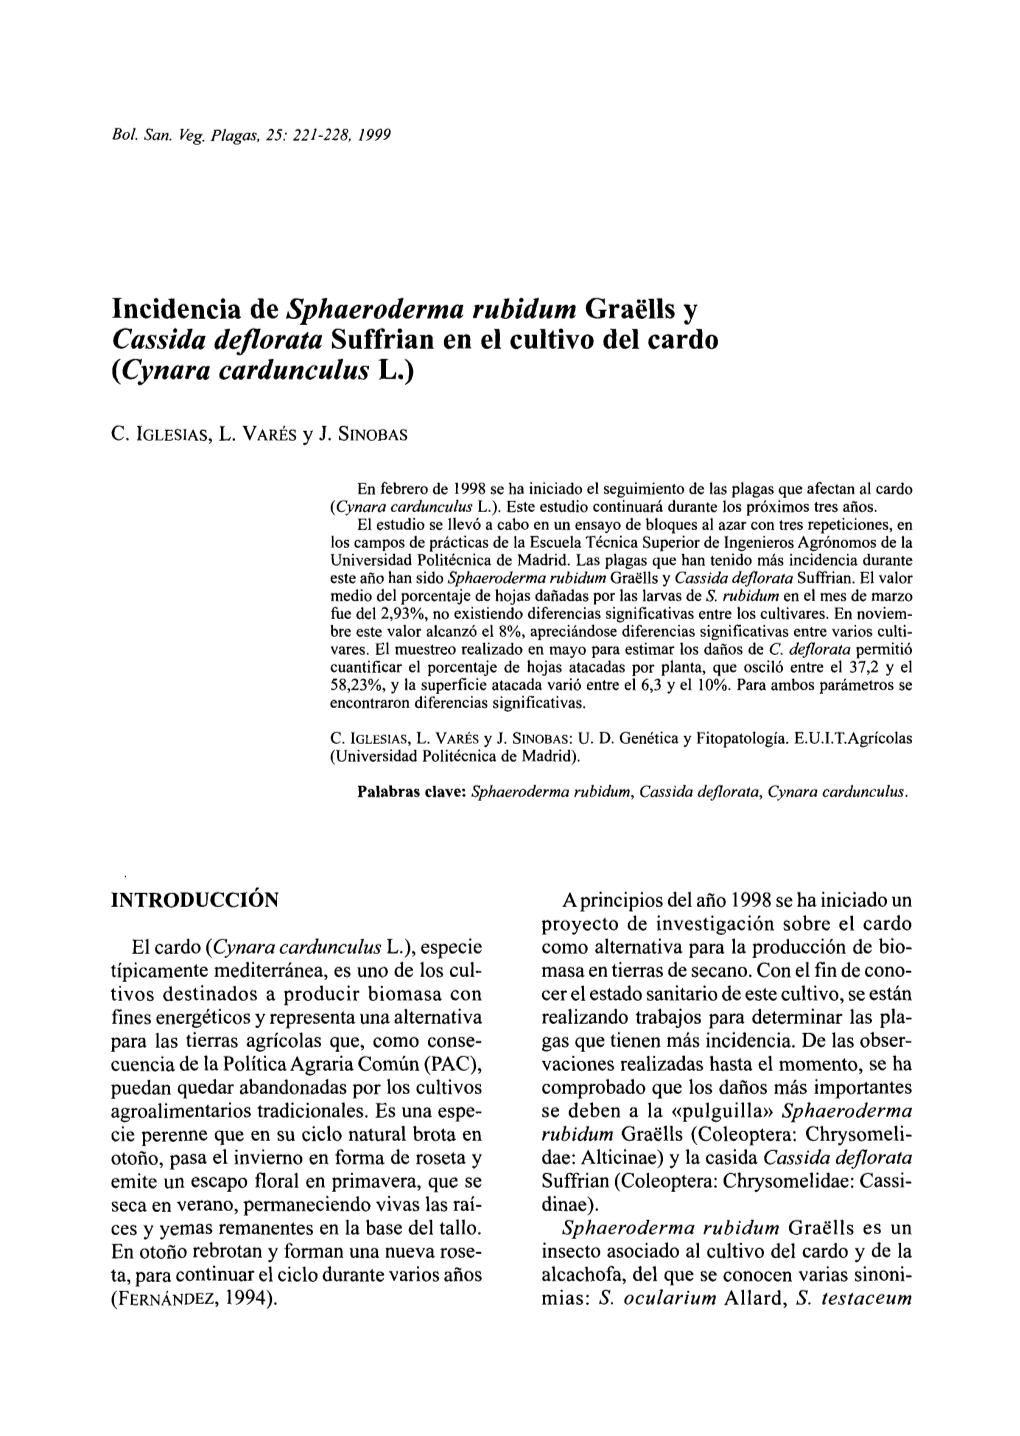 Incidencia De Sphaeroderma Rubidum Graëlls Y Cassida Deflorata Suffrian En El Cultivo Del Cardo (Cynara Cardunculus L.)